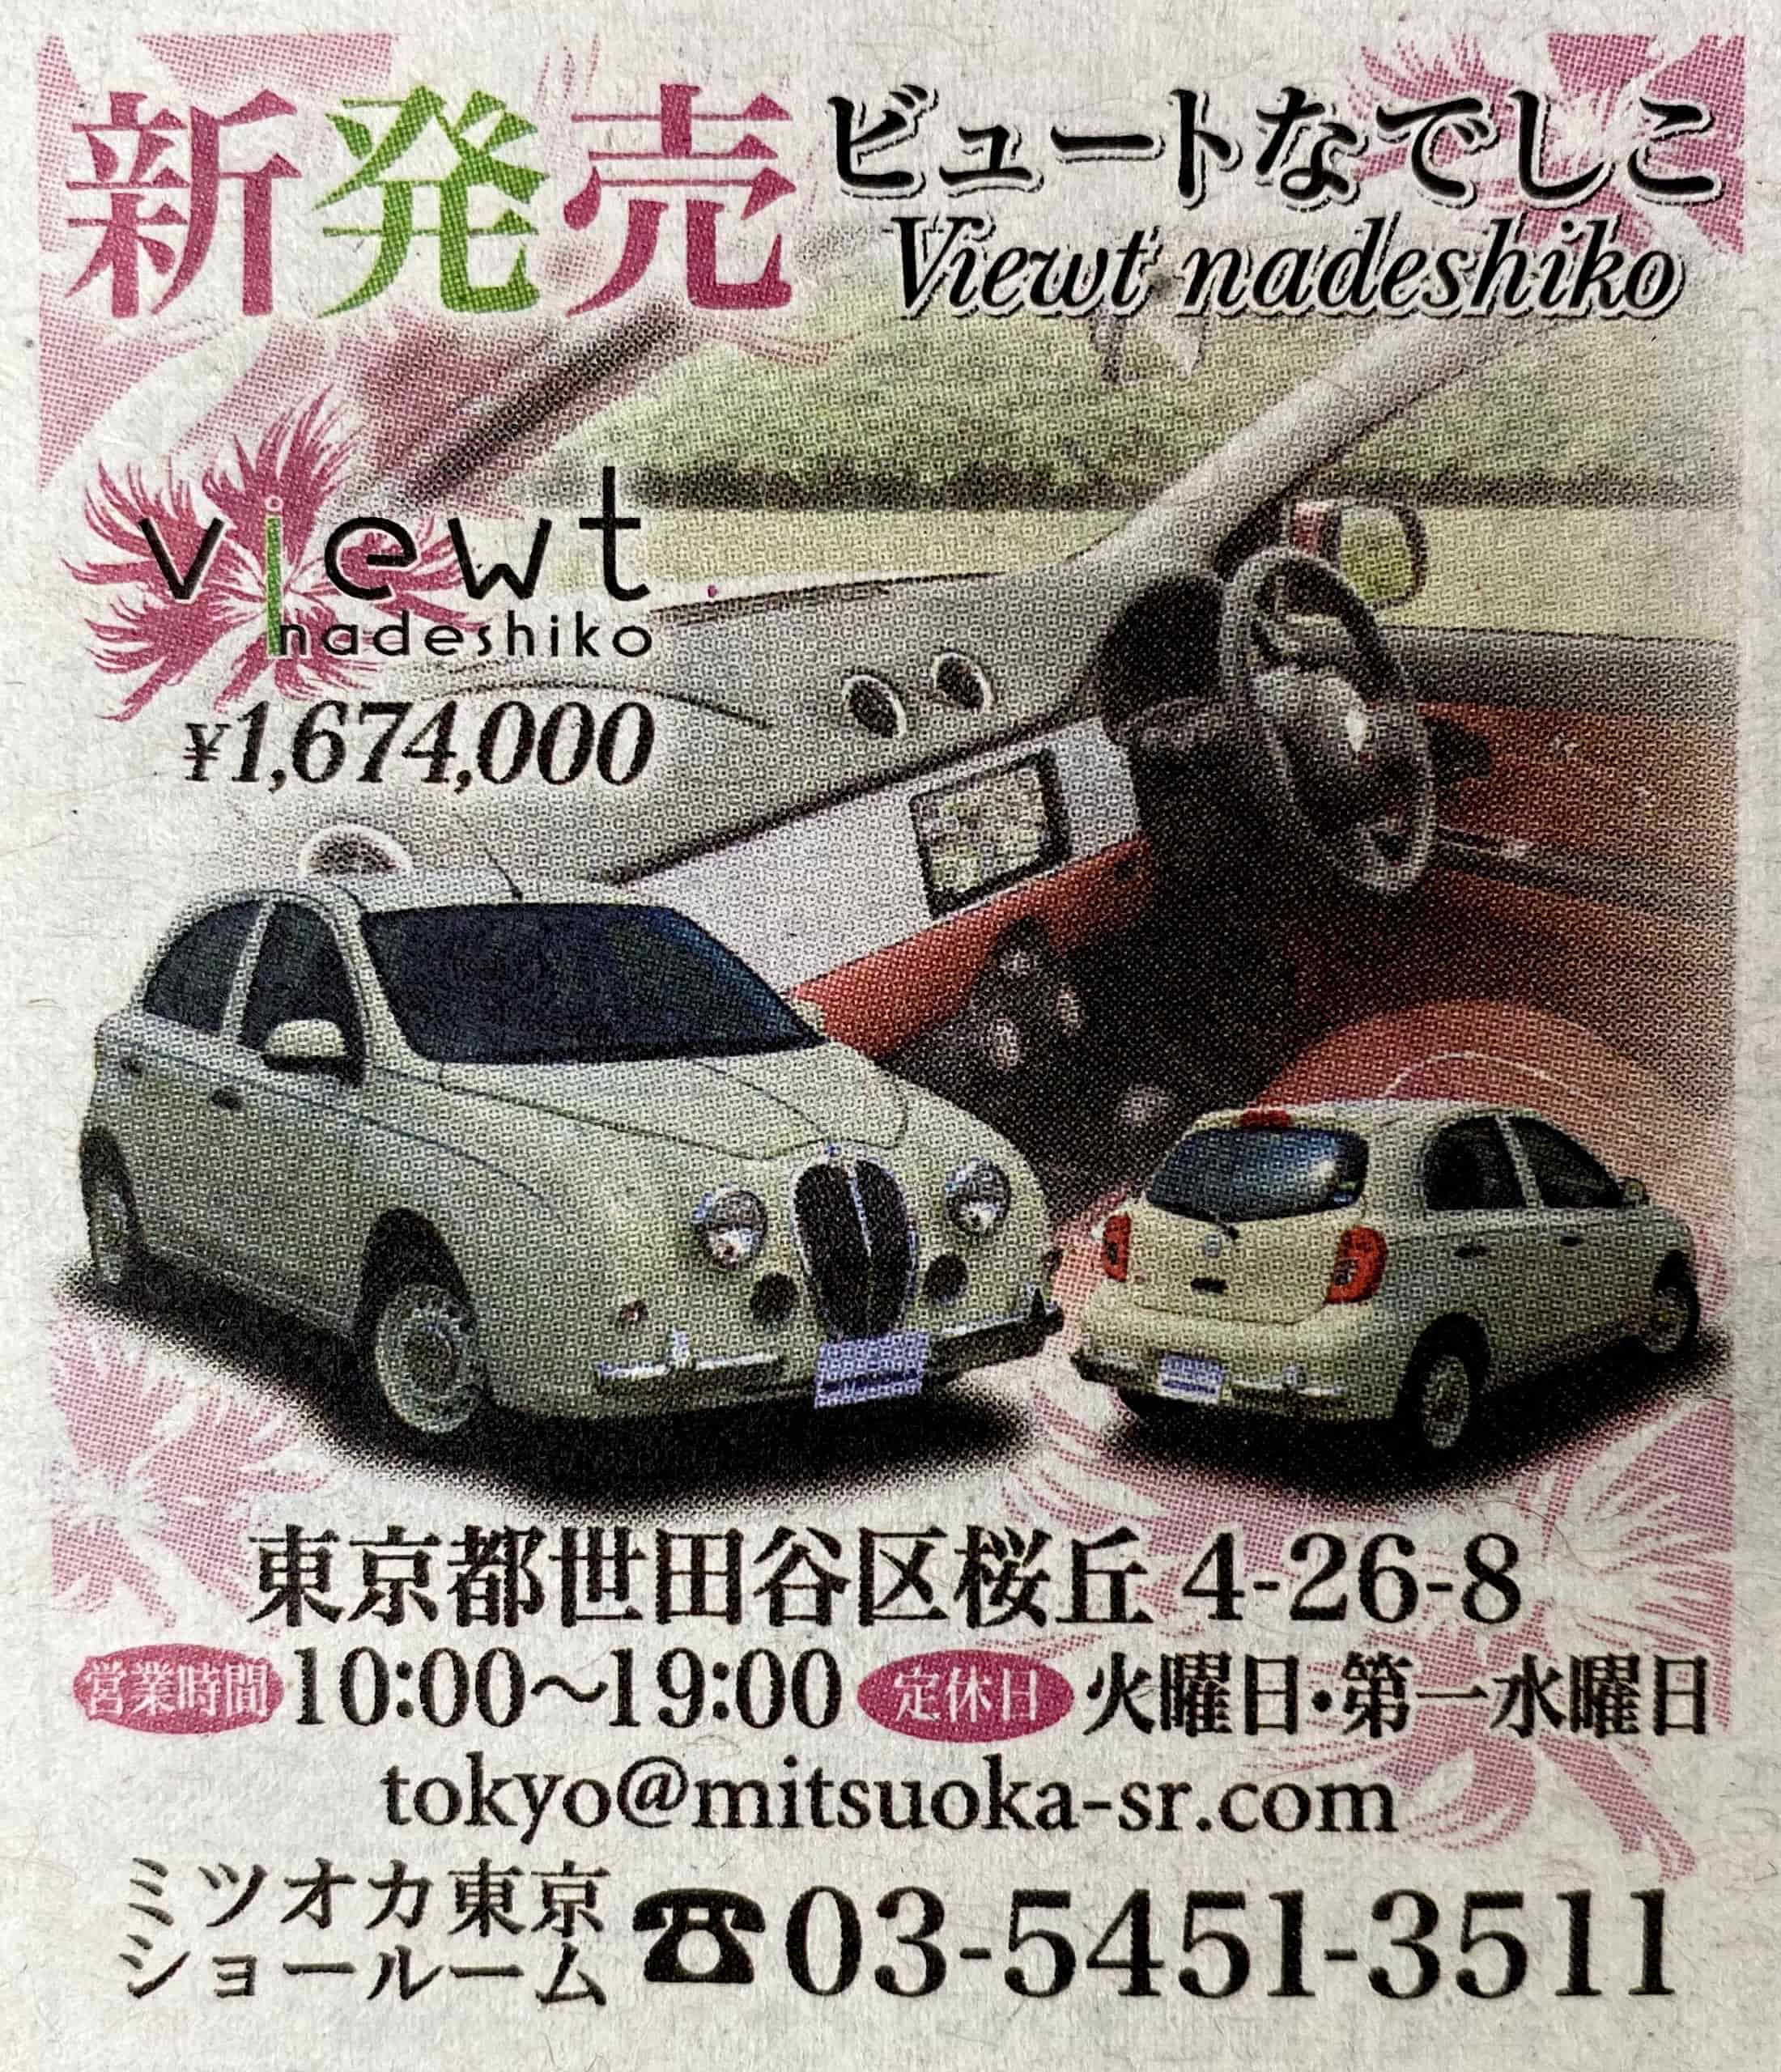 mitsuoka mortors newspaper advertisement